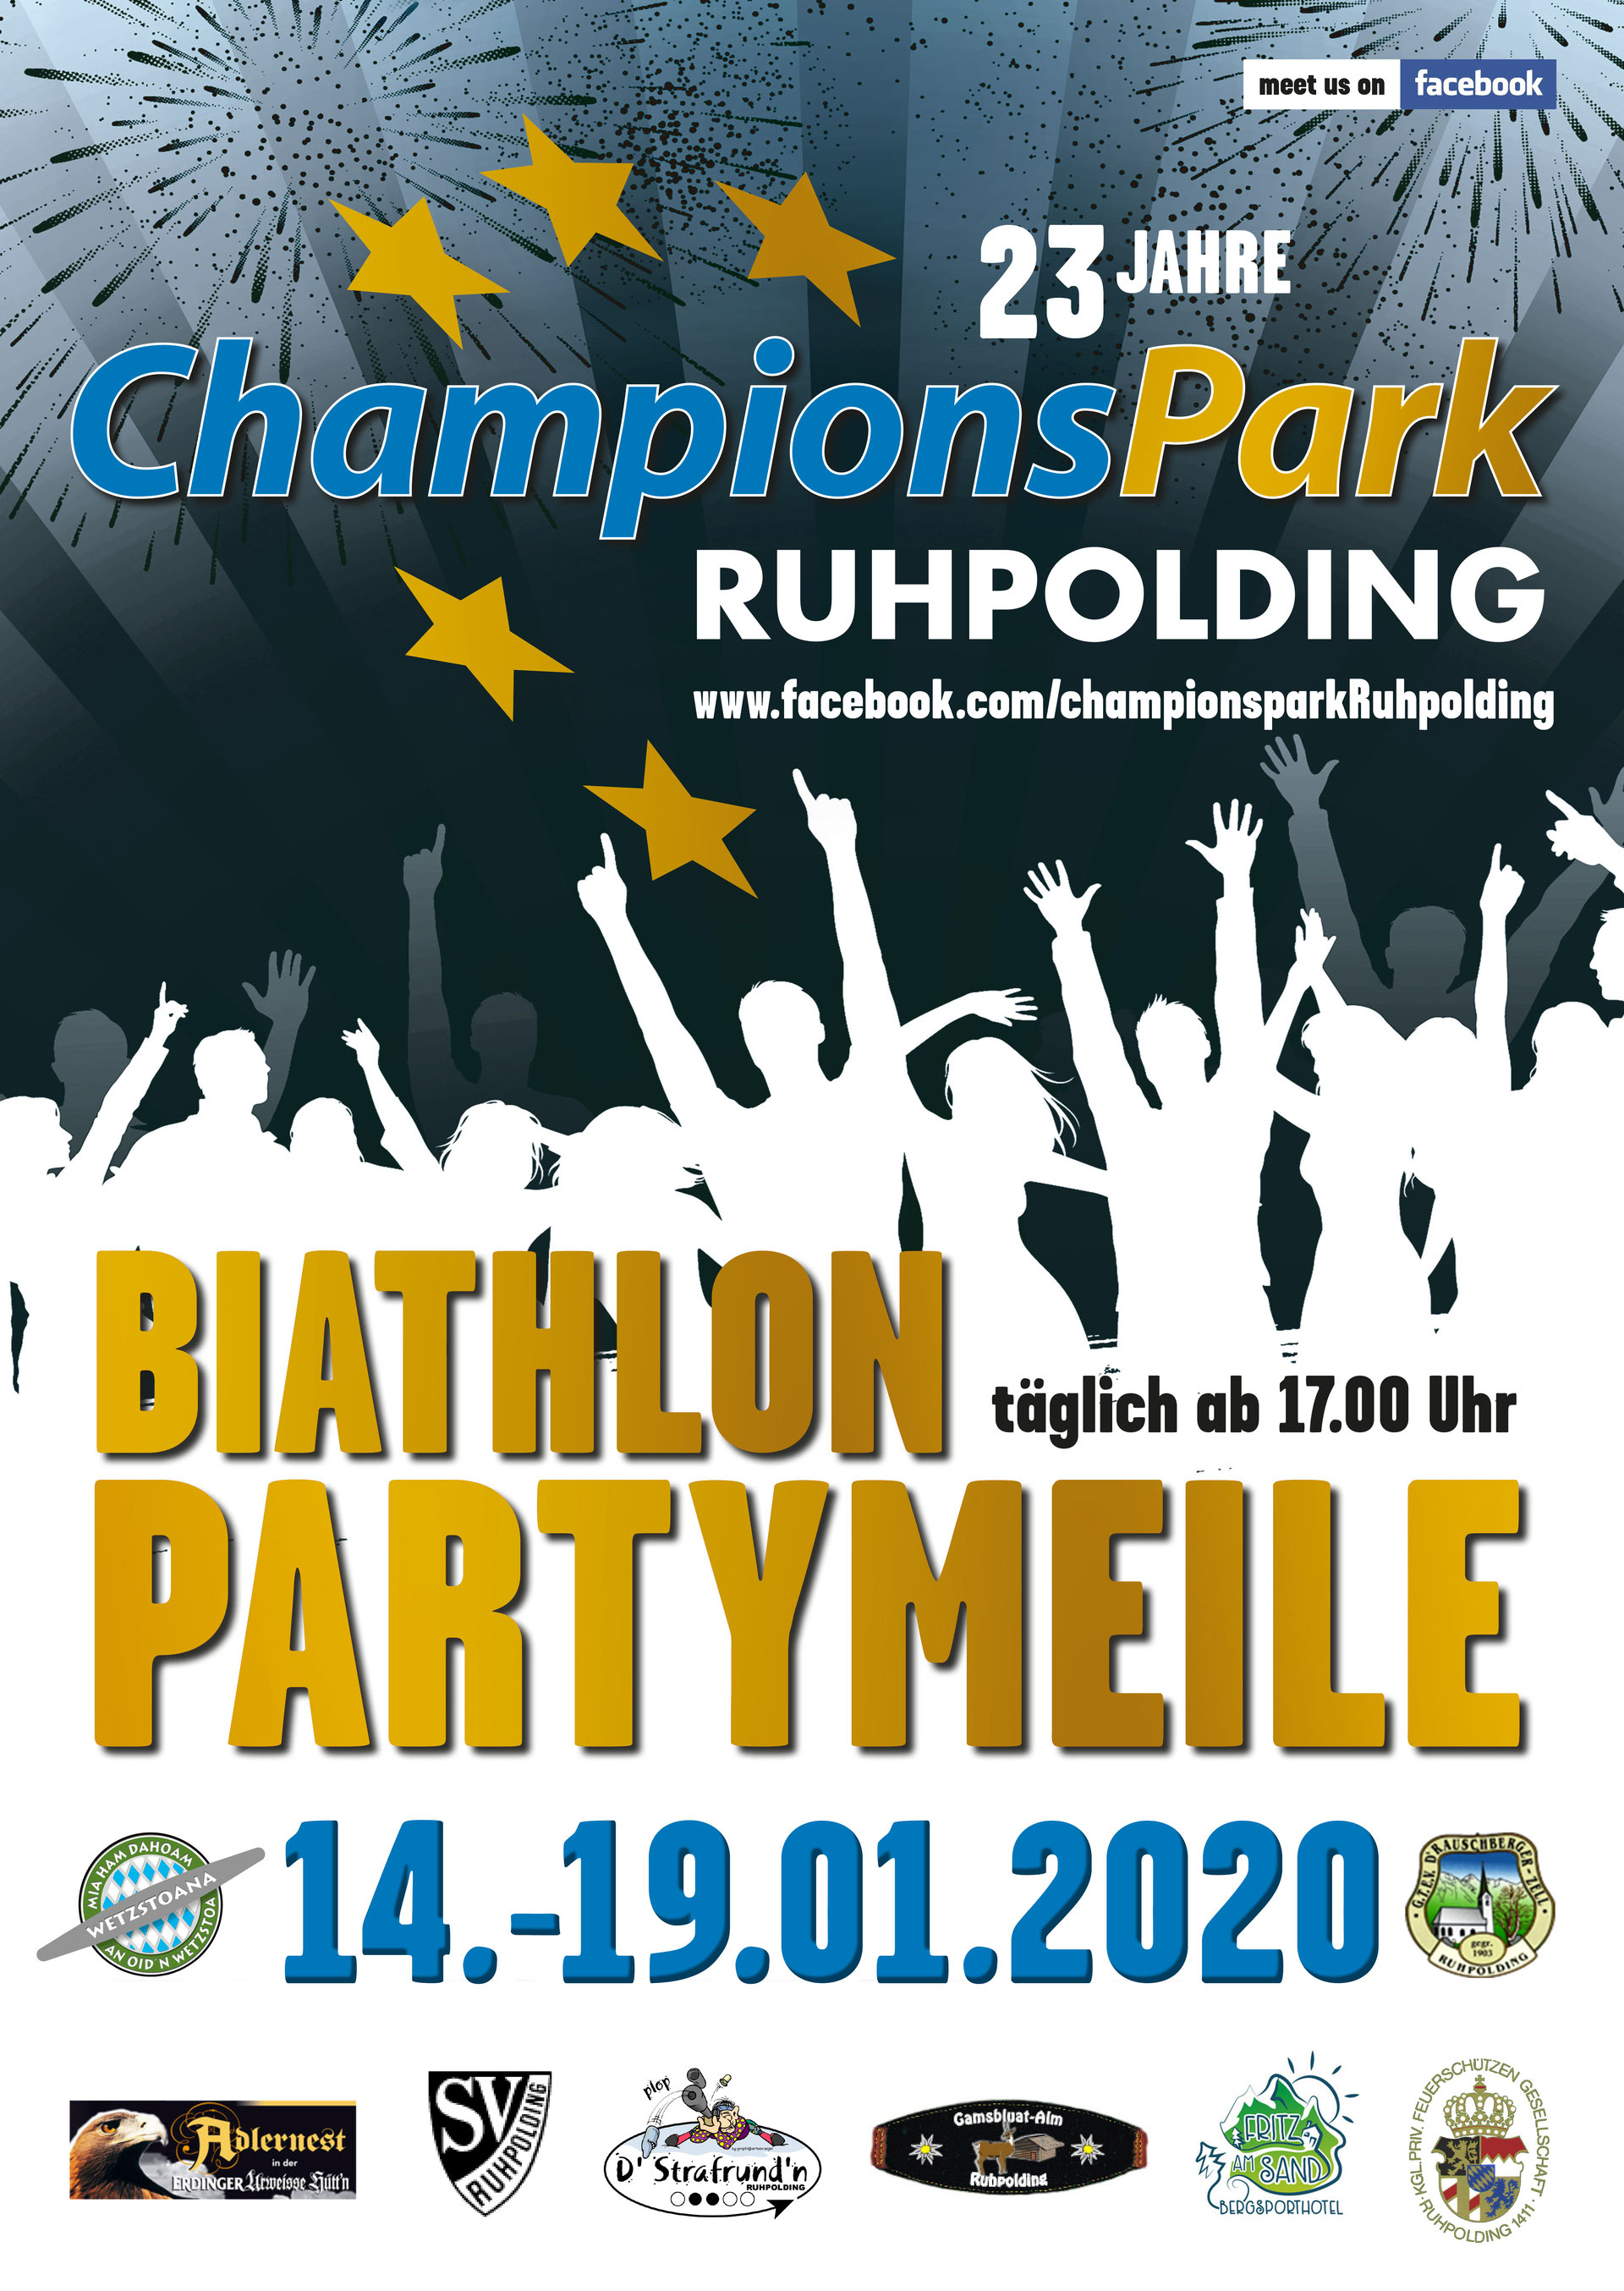 Biathlon 2020 ruhpolding